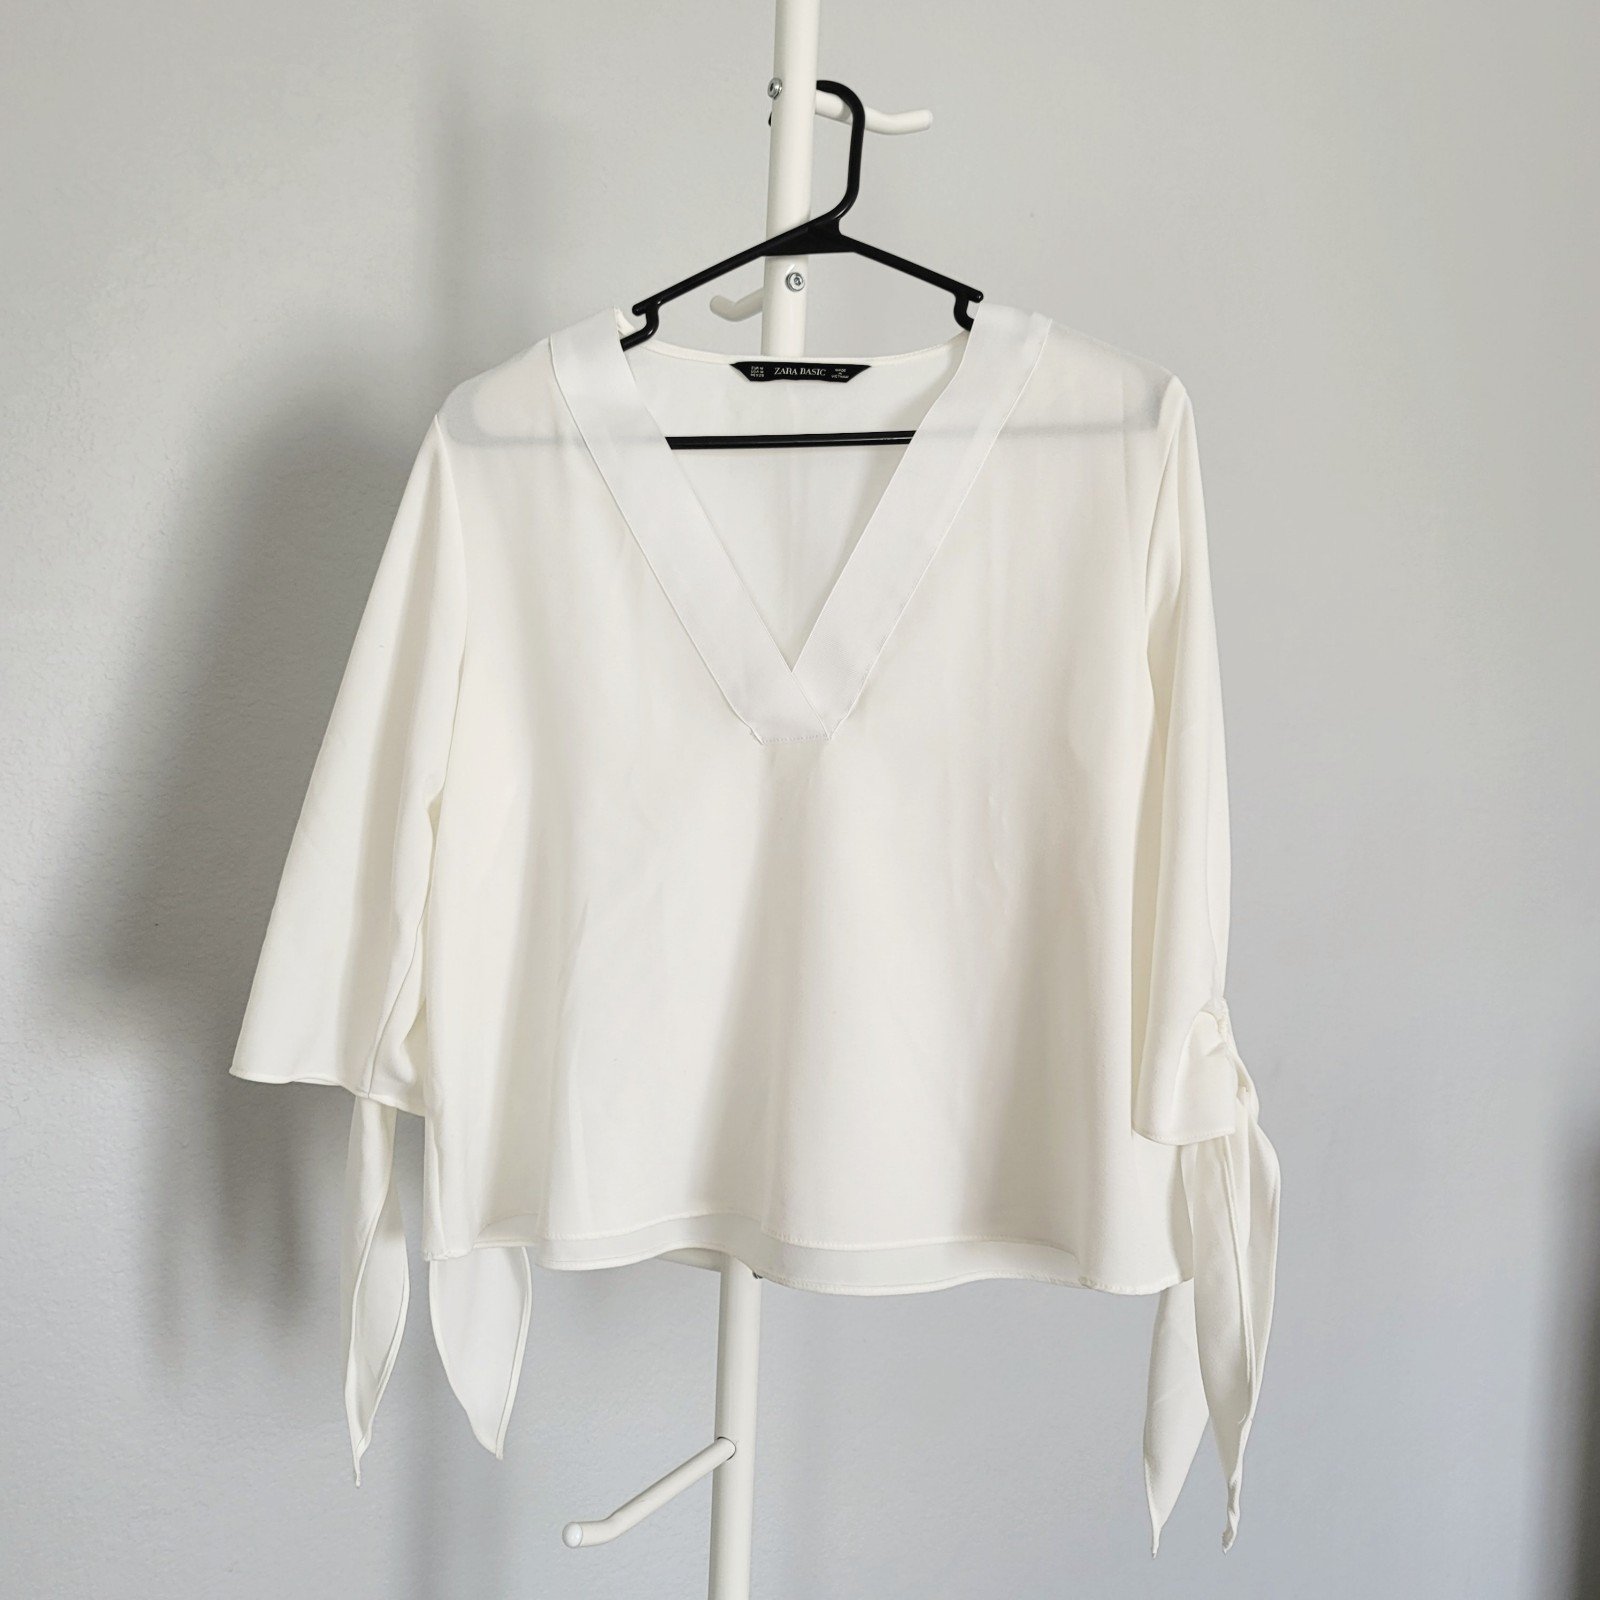 Affordable ZARA white tops/ blouse mgmwsiigi US Sale